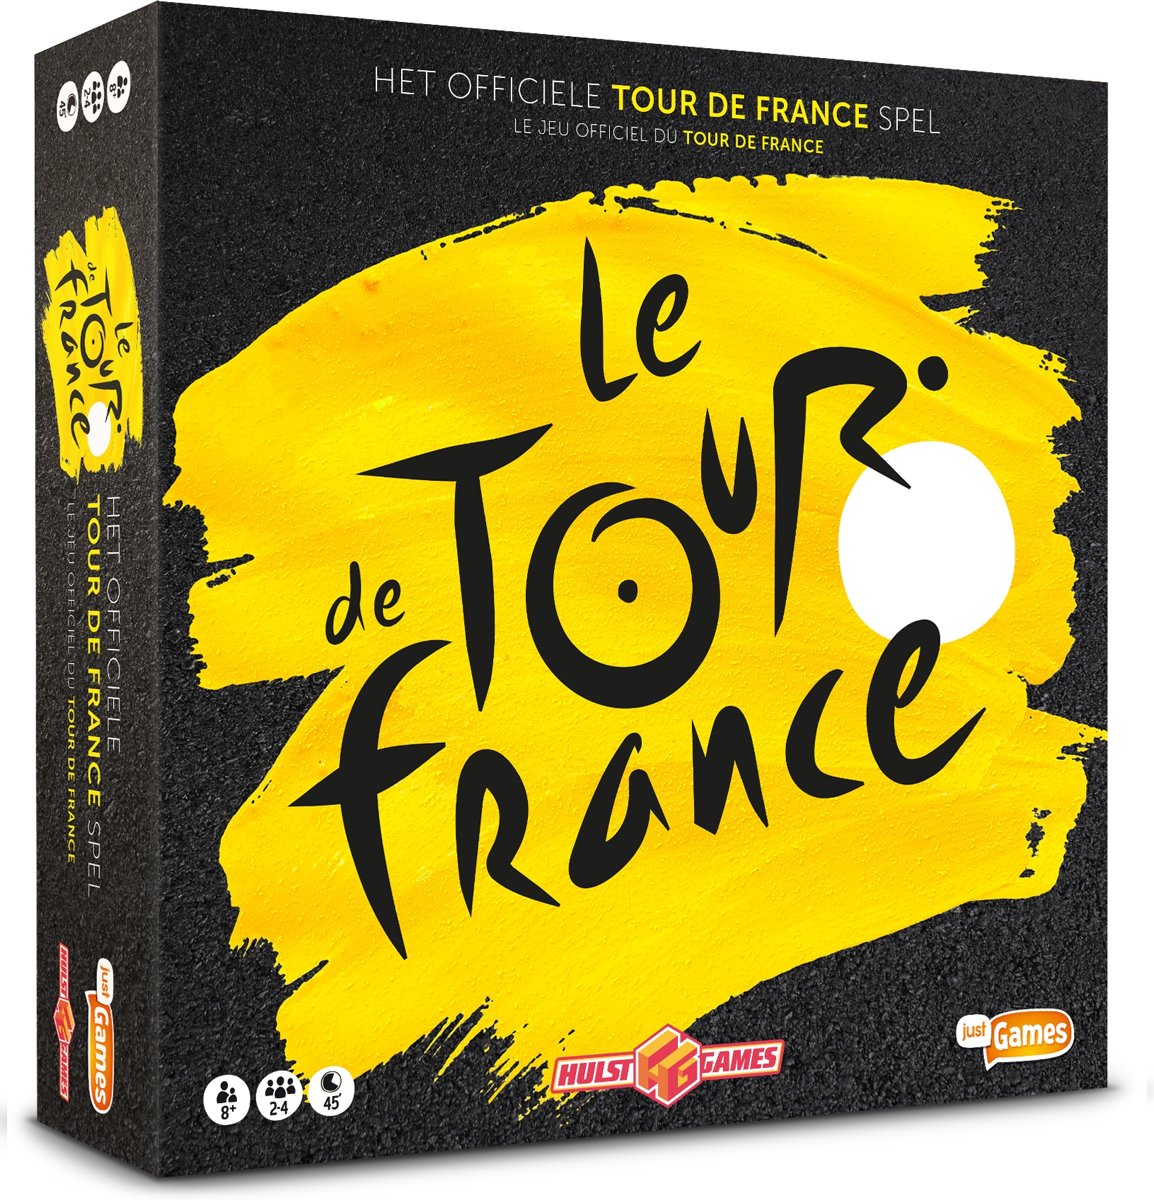 Tour de France bordspel